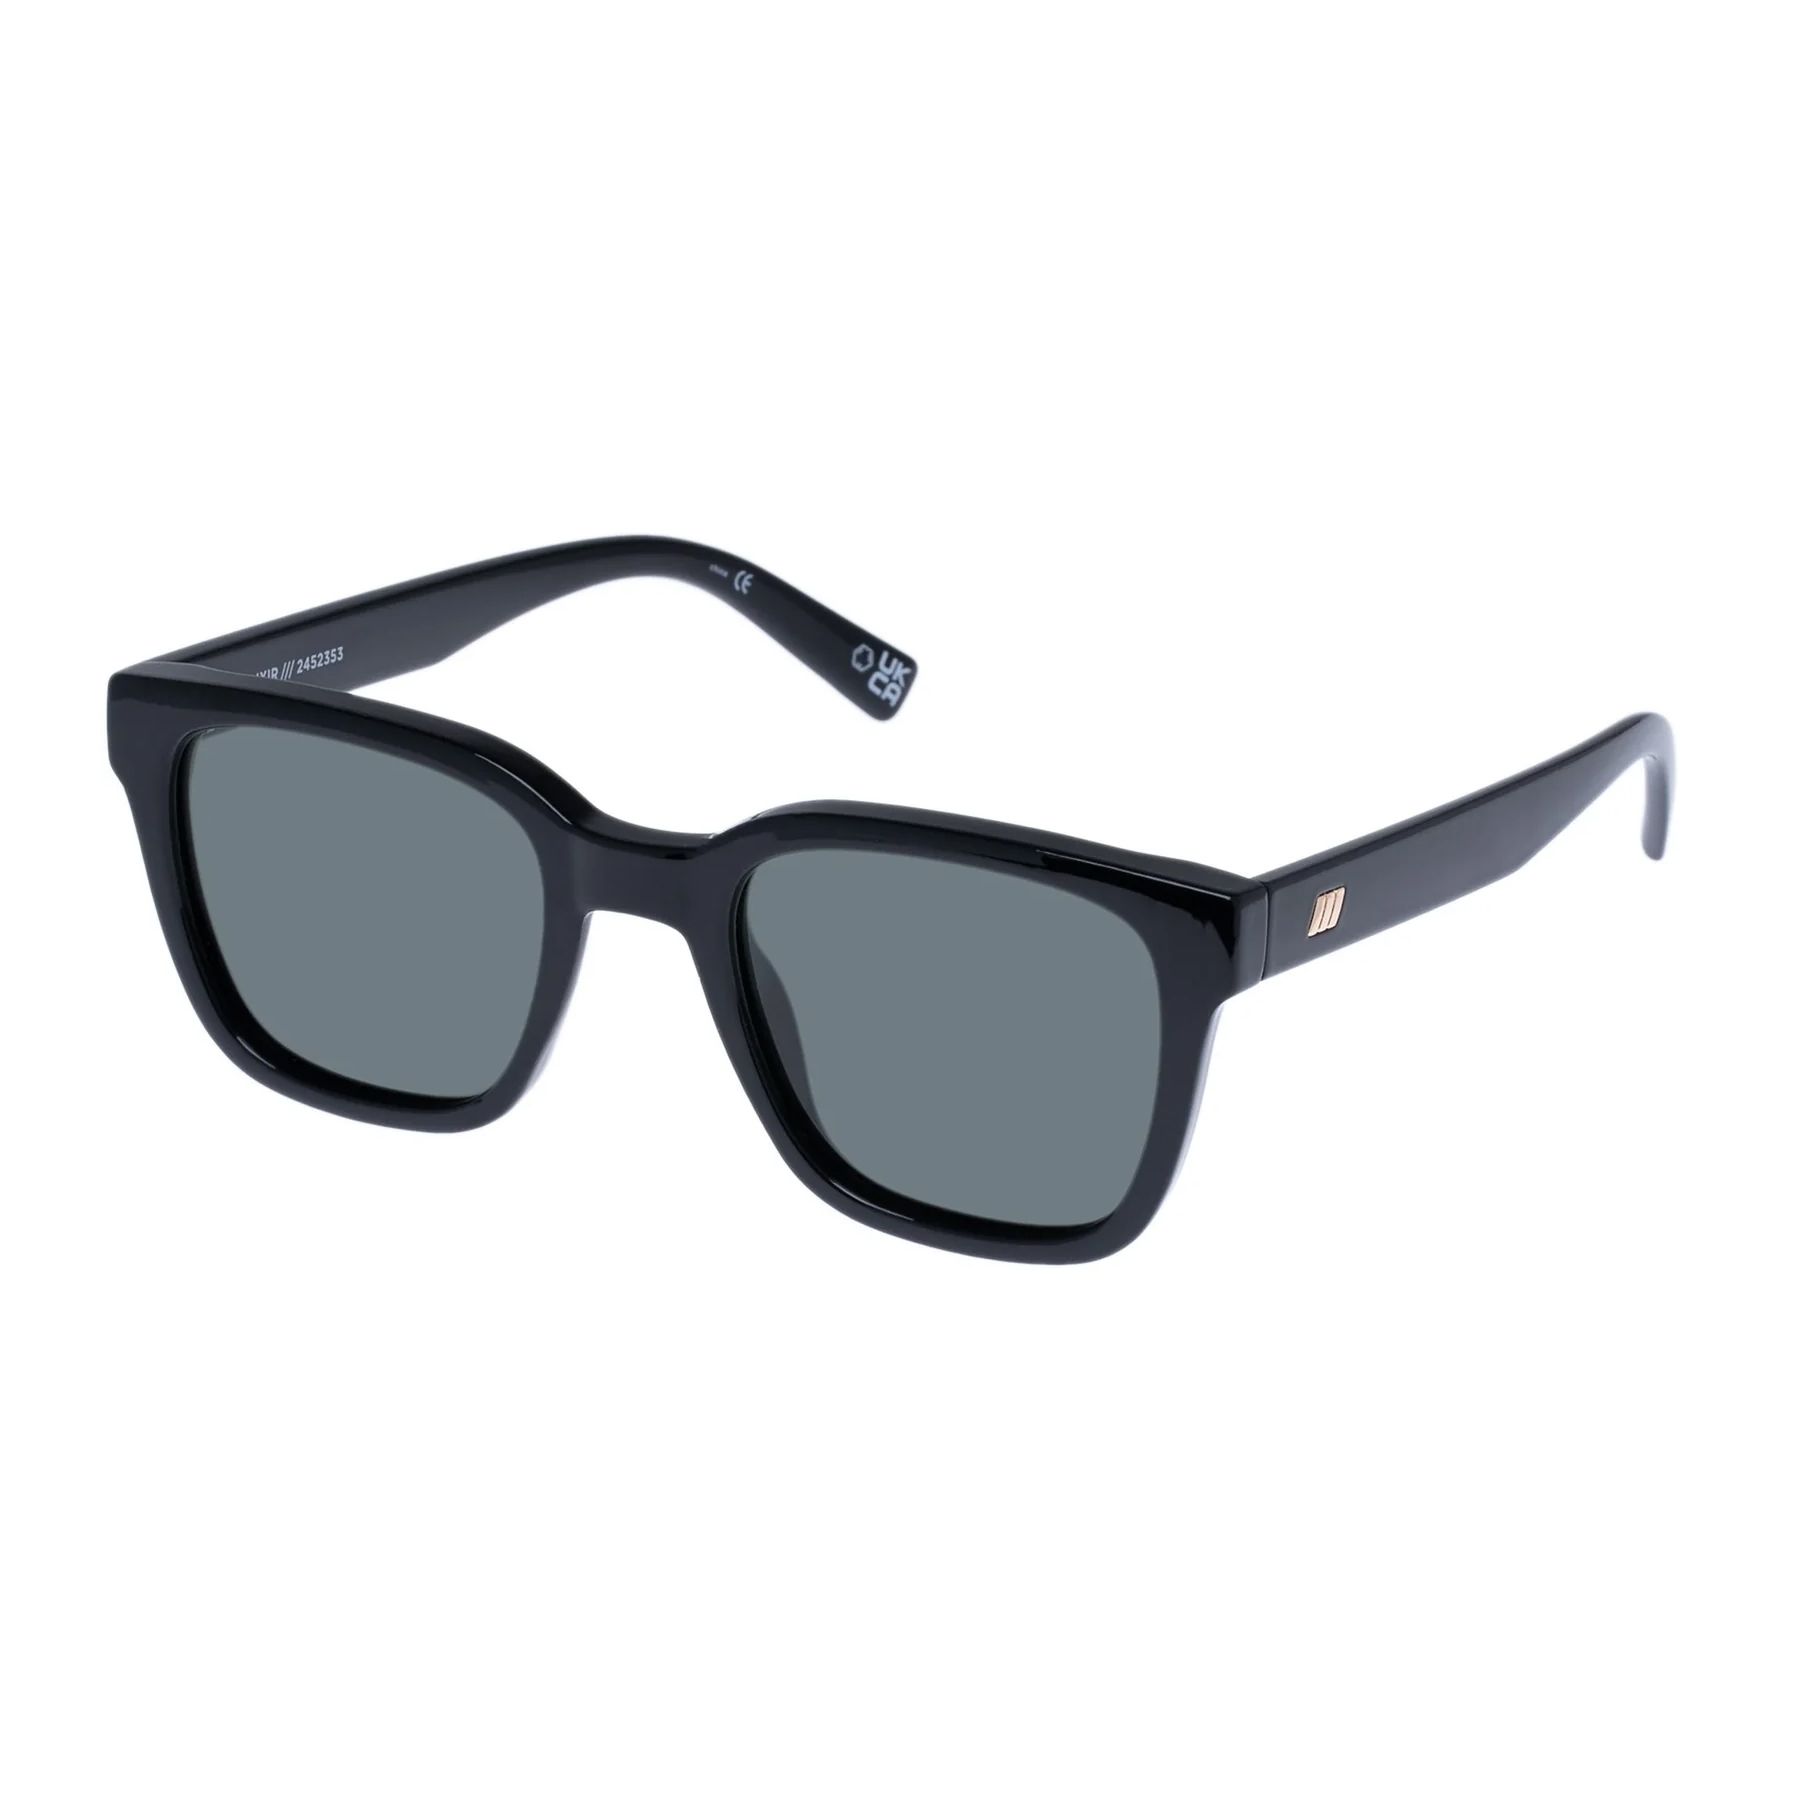 ELIXIR Square Sunglasses BLACK - size 52